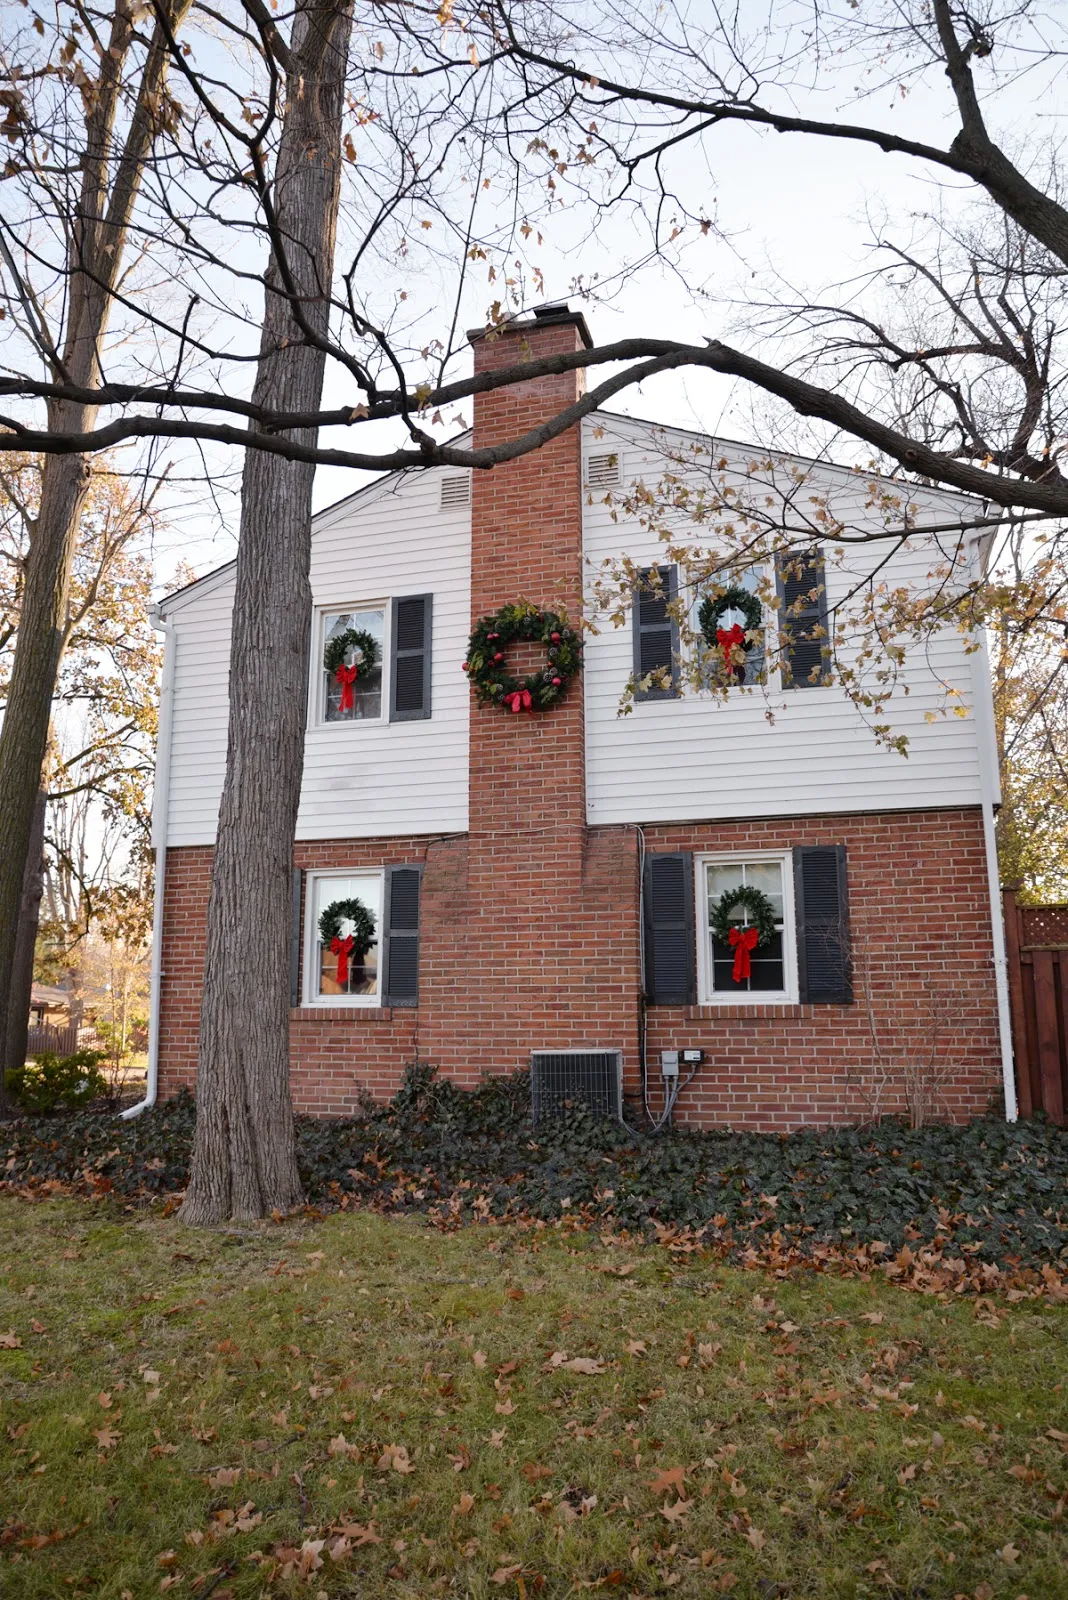 white house black shutters christmas wreaths, wreath on chimney